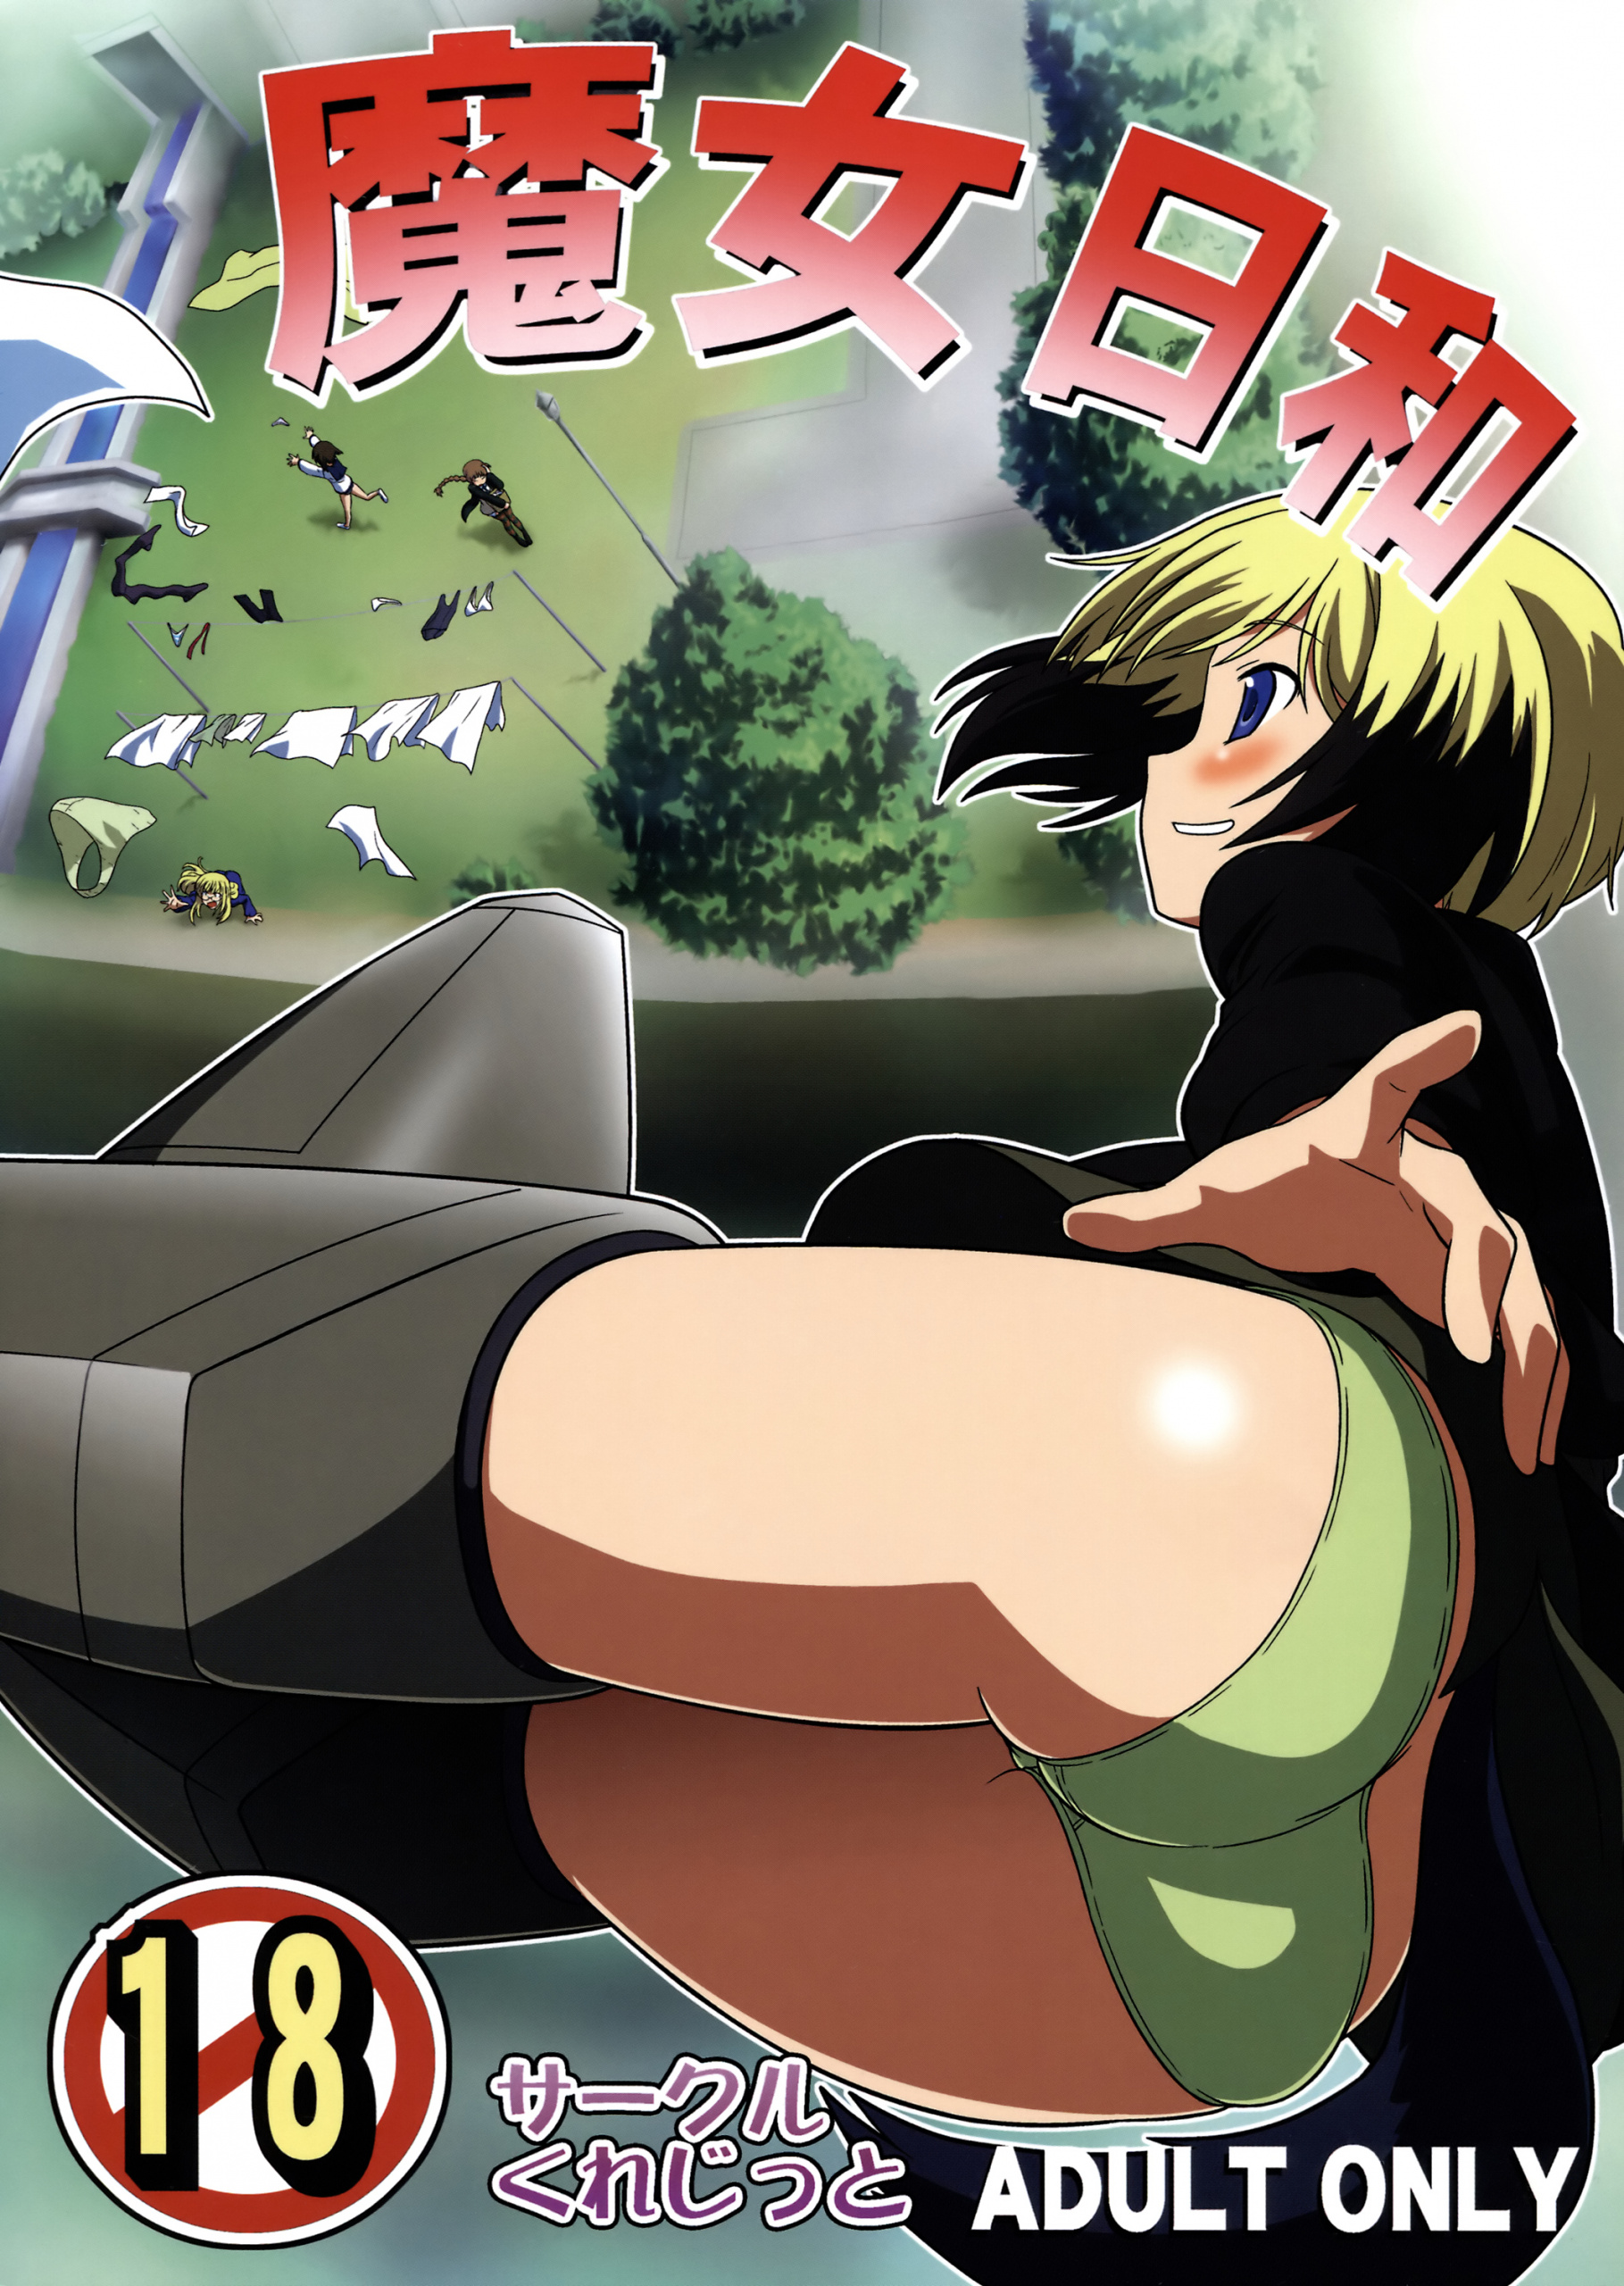 Manga Lesbian Porn - Yuri: Girls daily games - Multporn Comics & Hentai manga